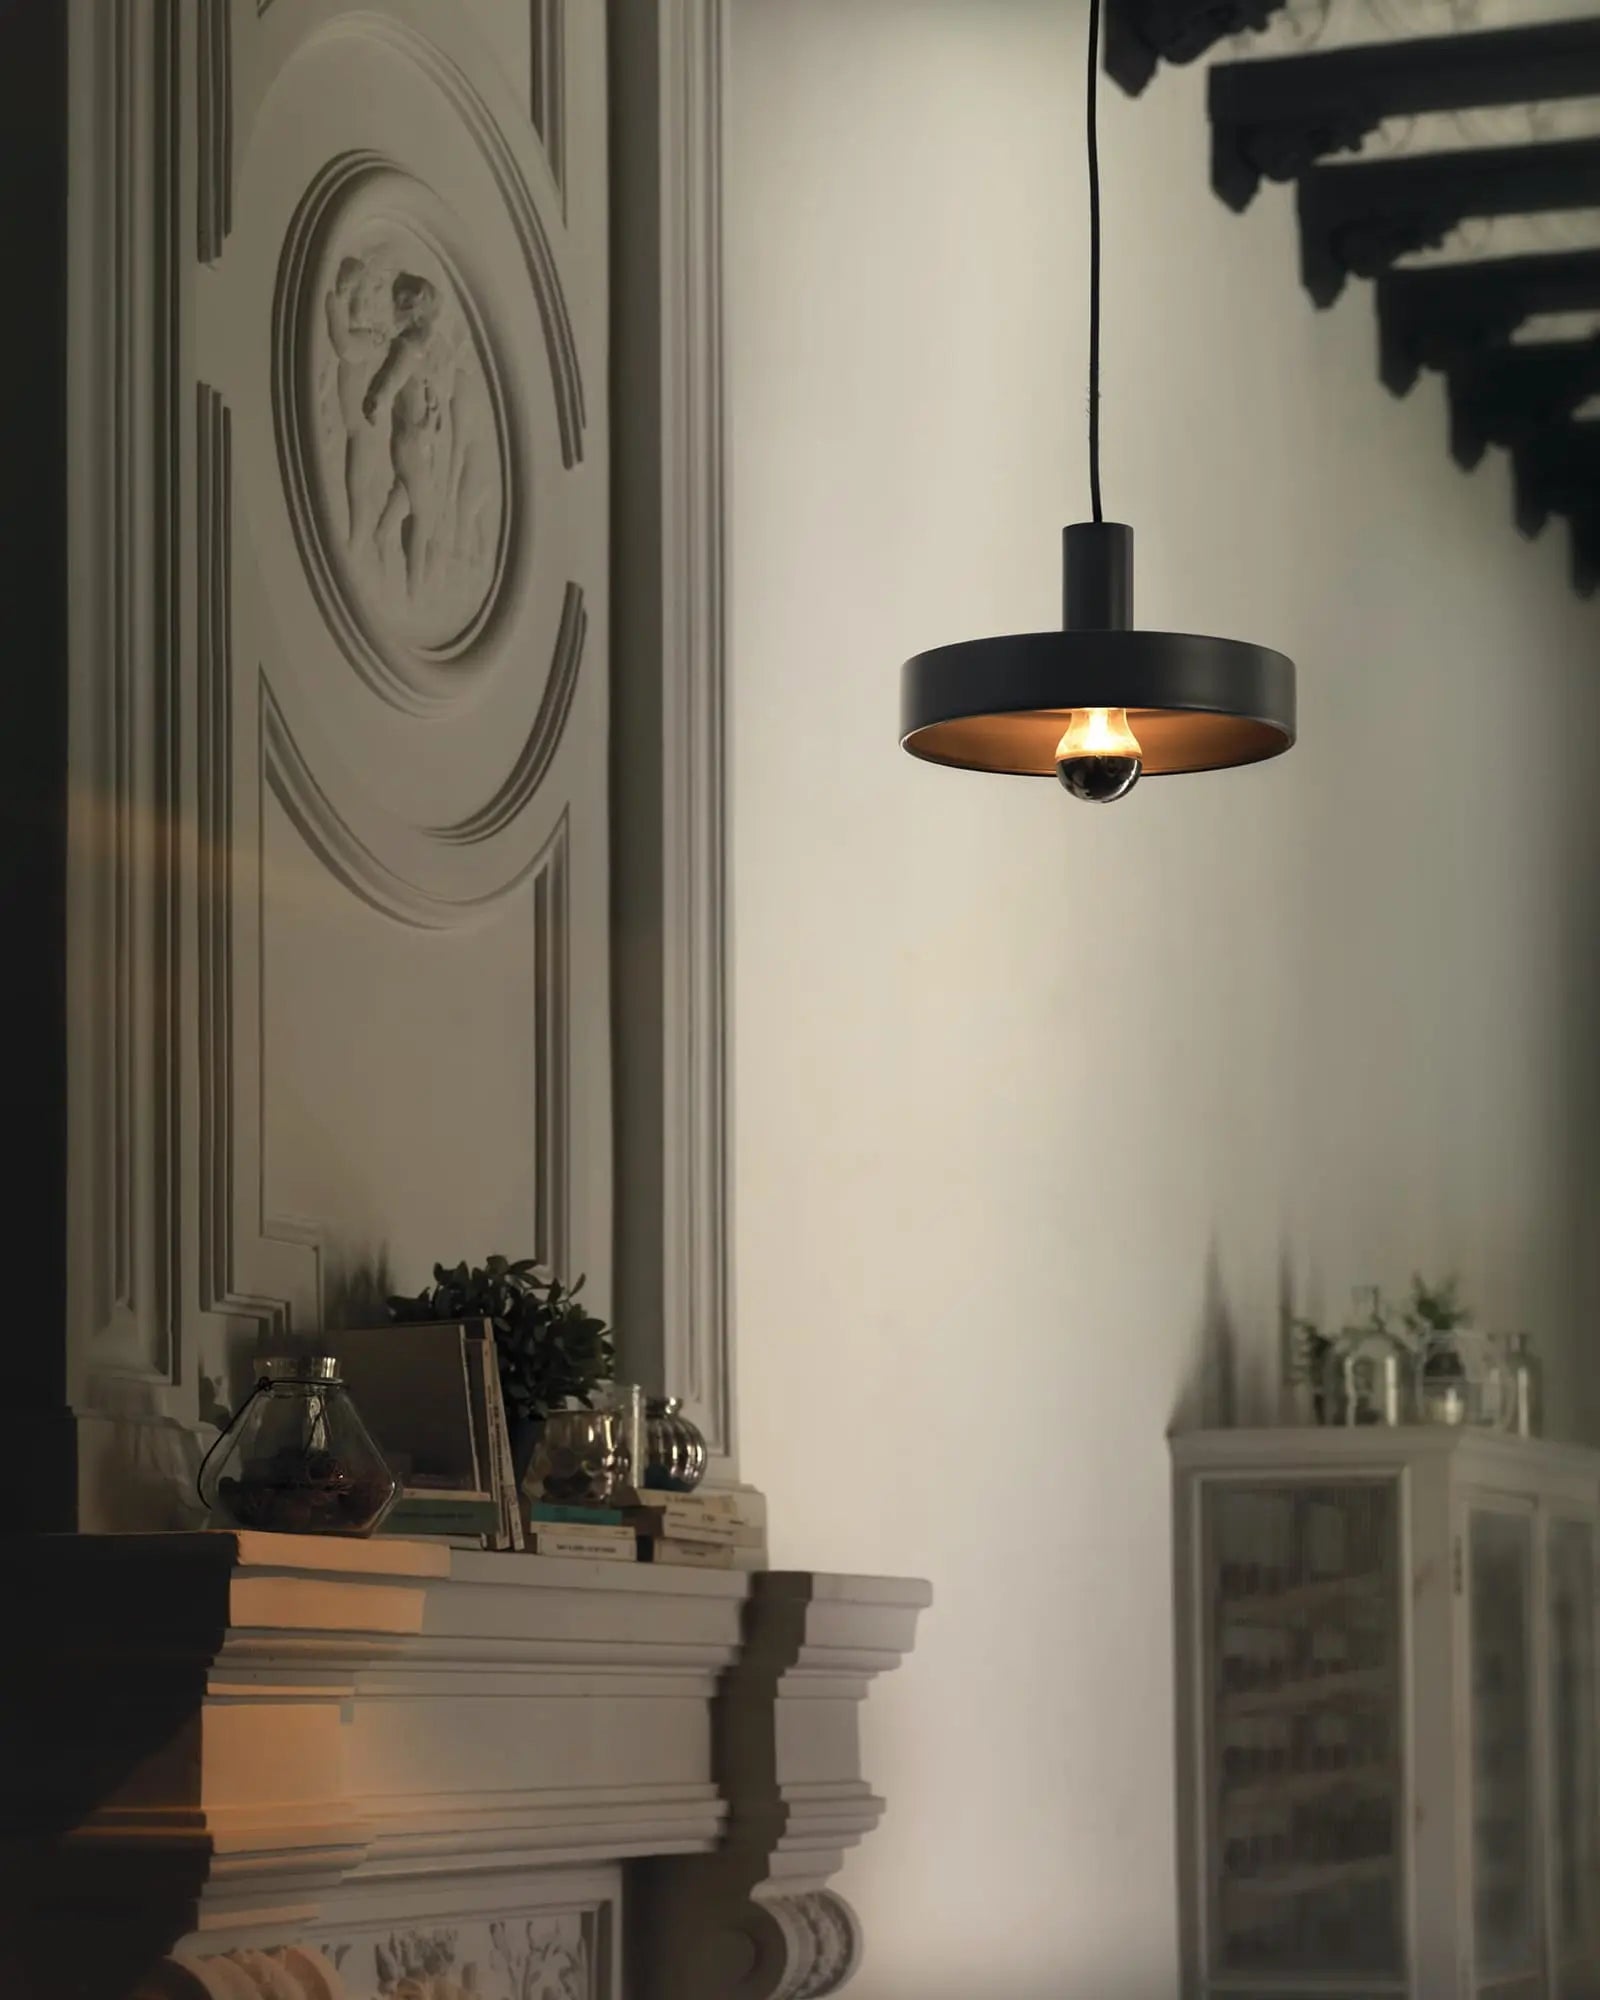 Aloa flat disc pendant light in a contemporary interior above a fireplace